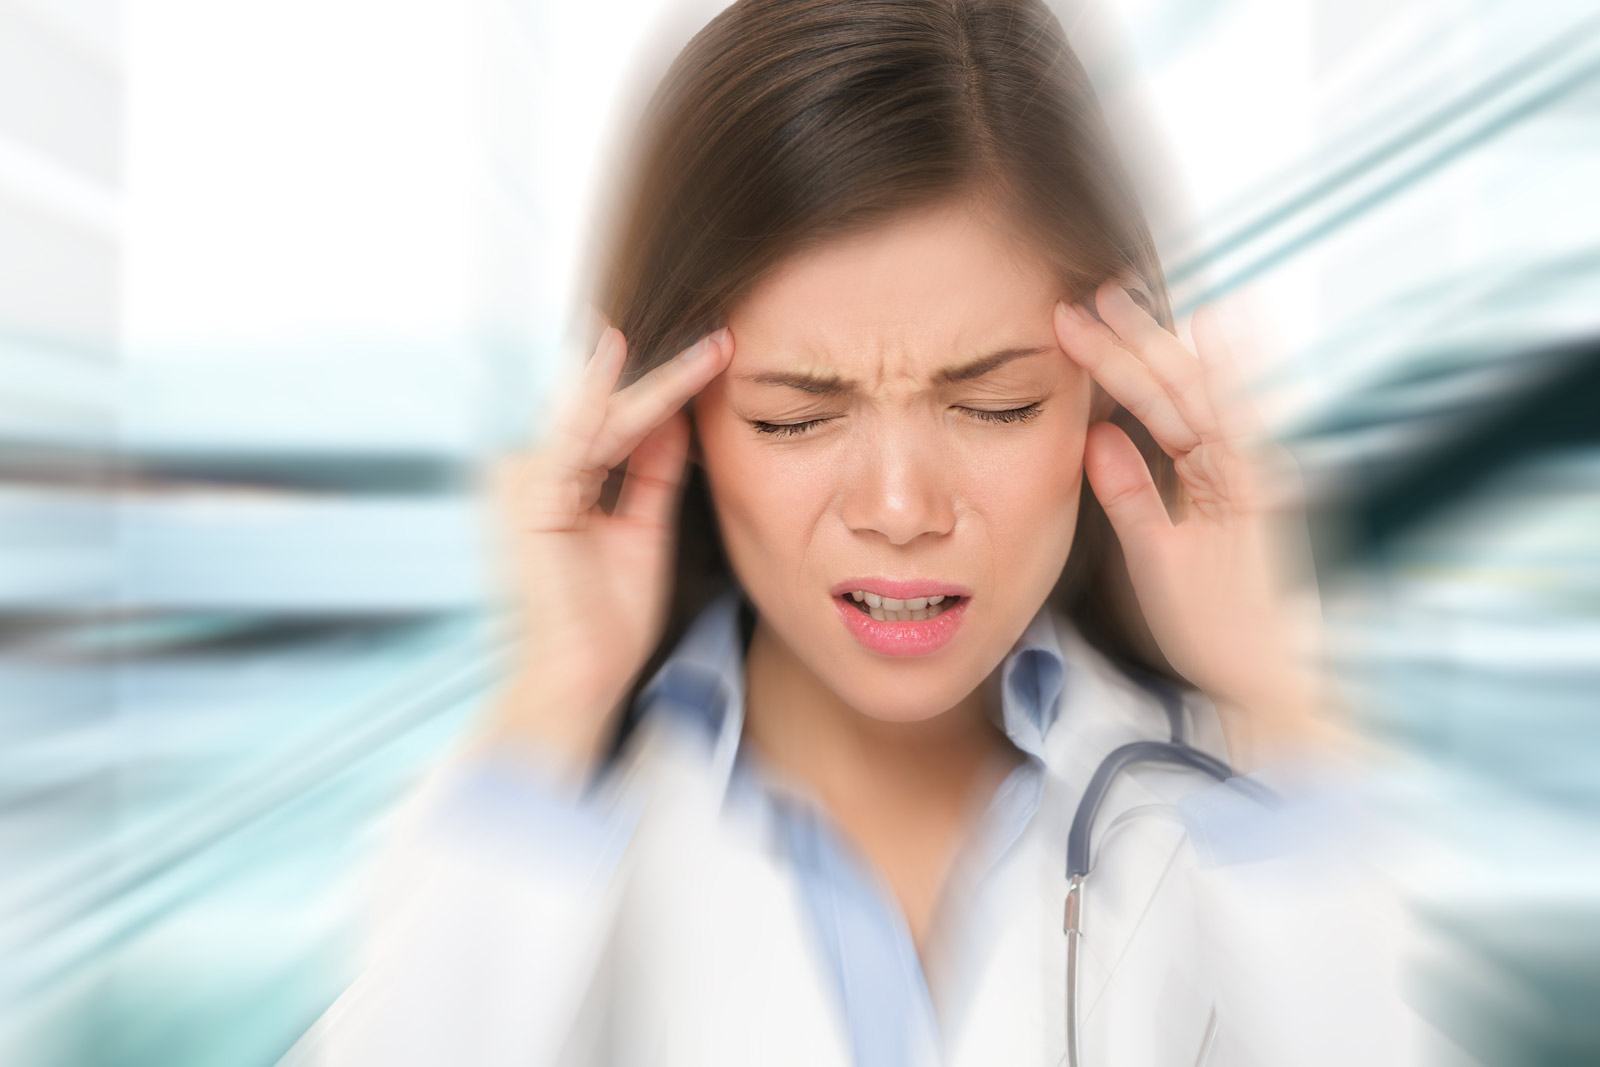 Headaches and Eye Problems